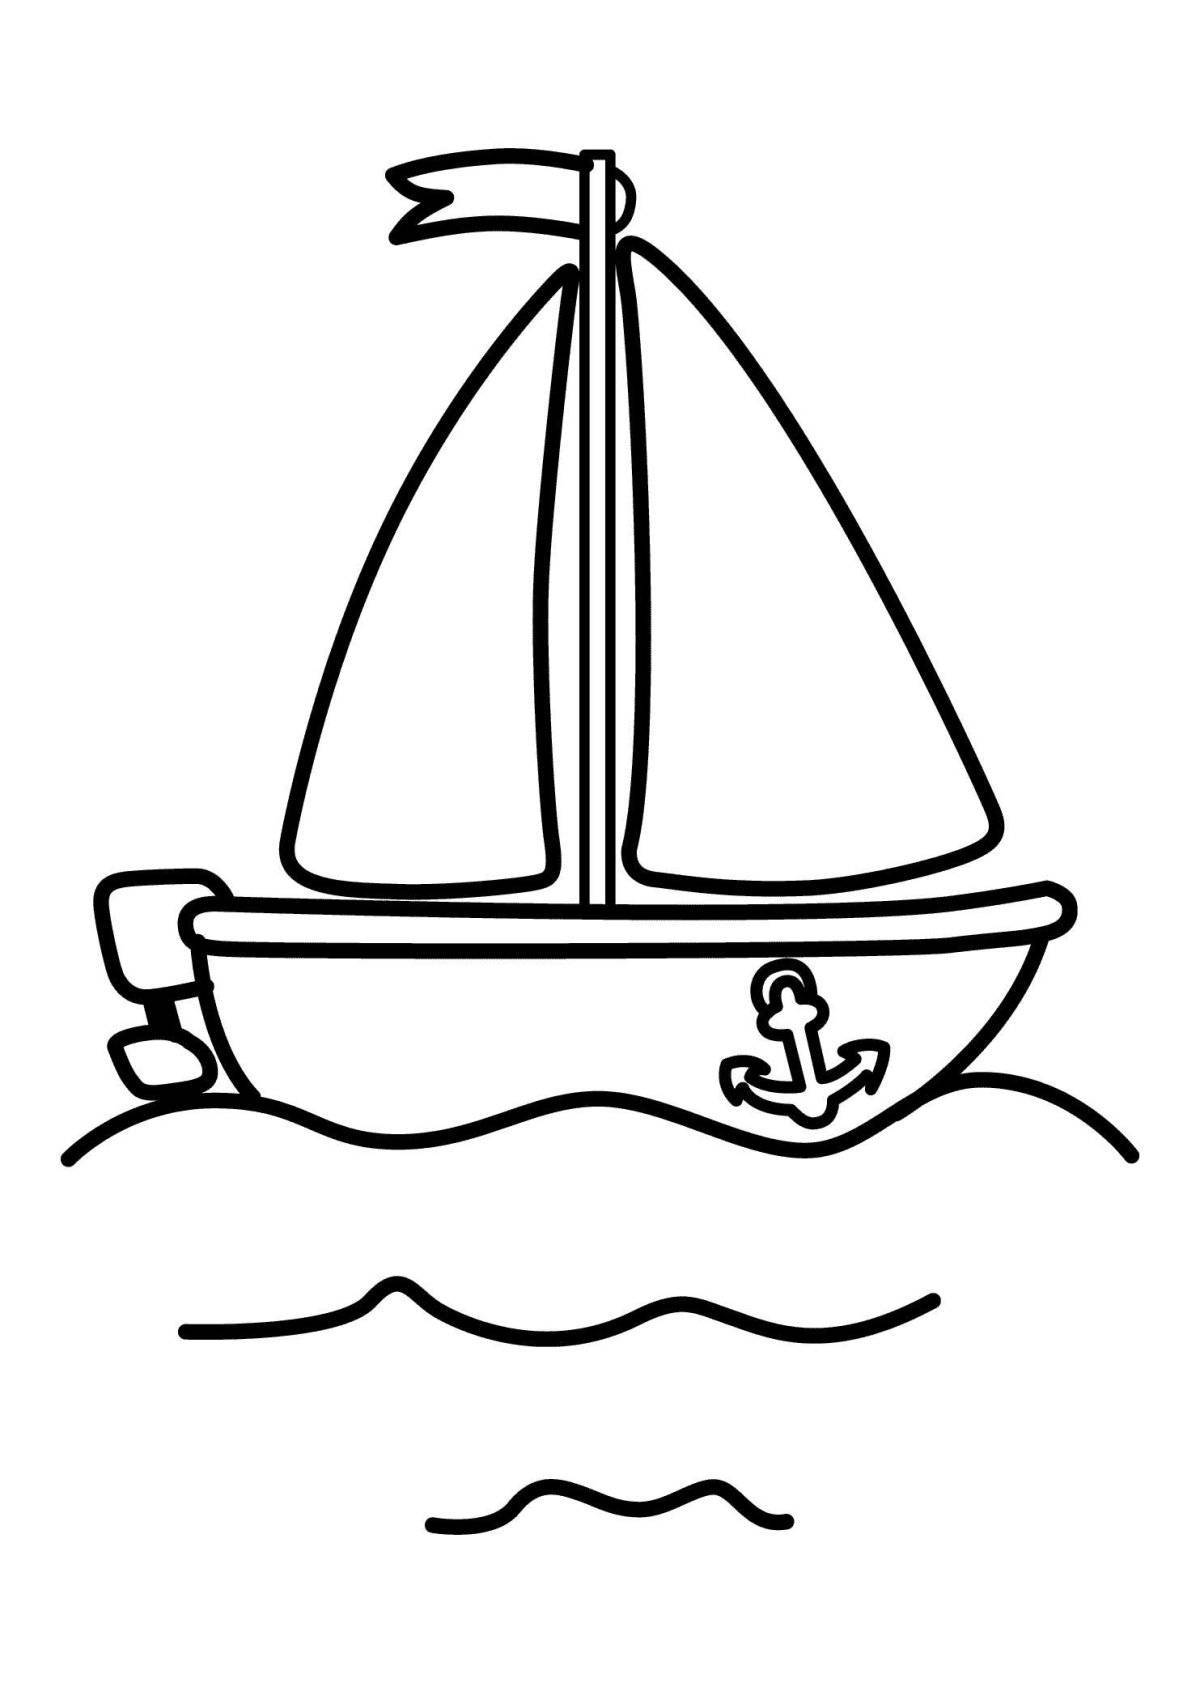 Coloring page joyful boat